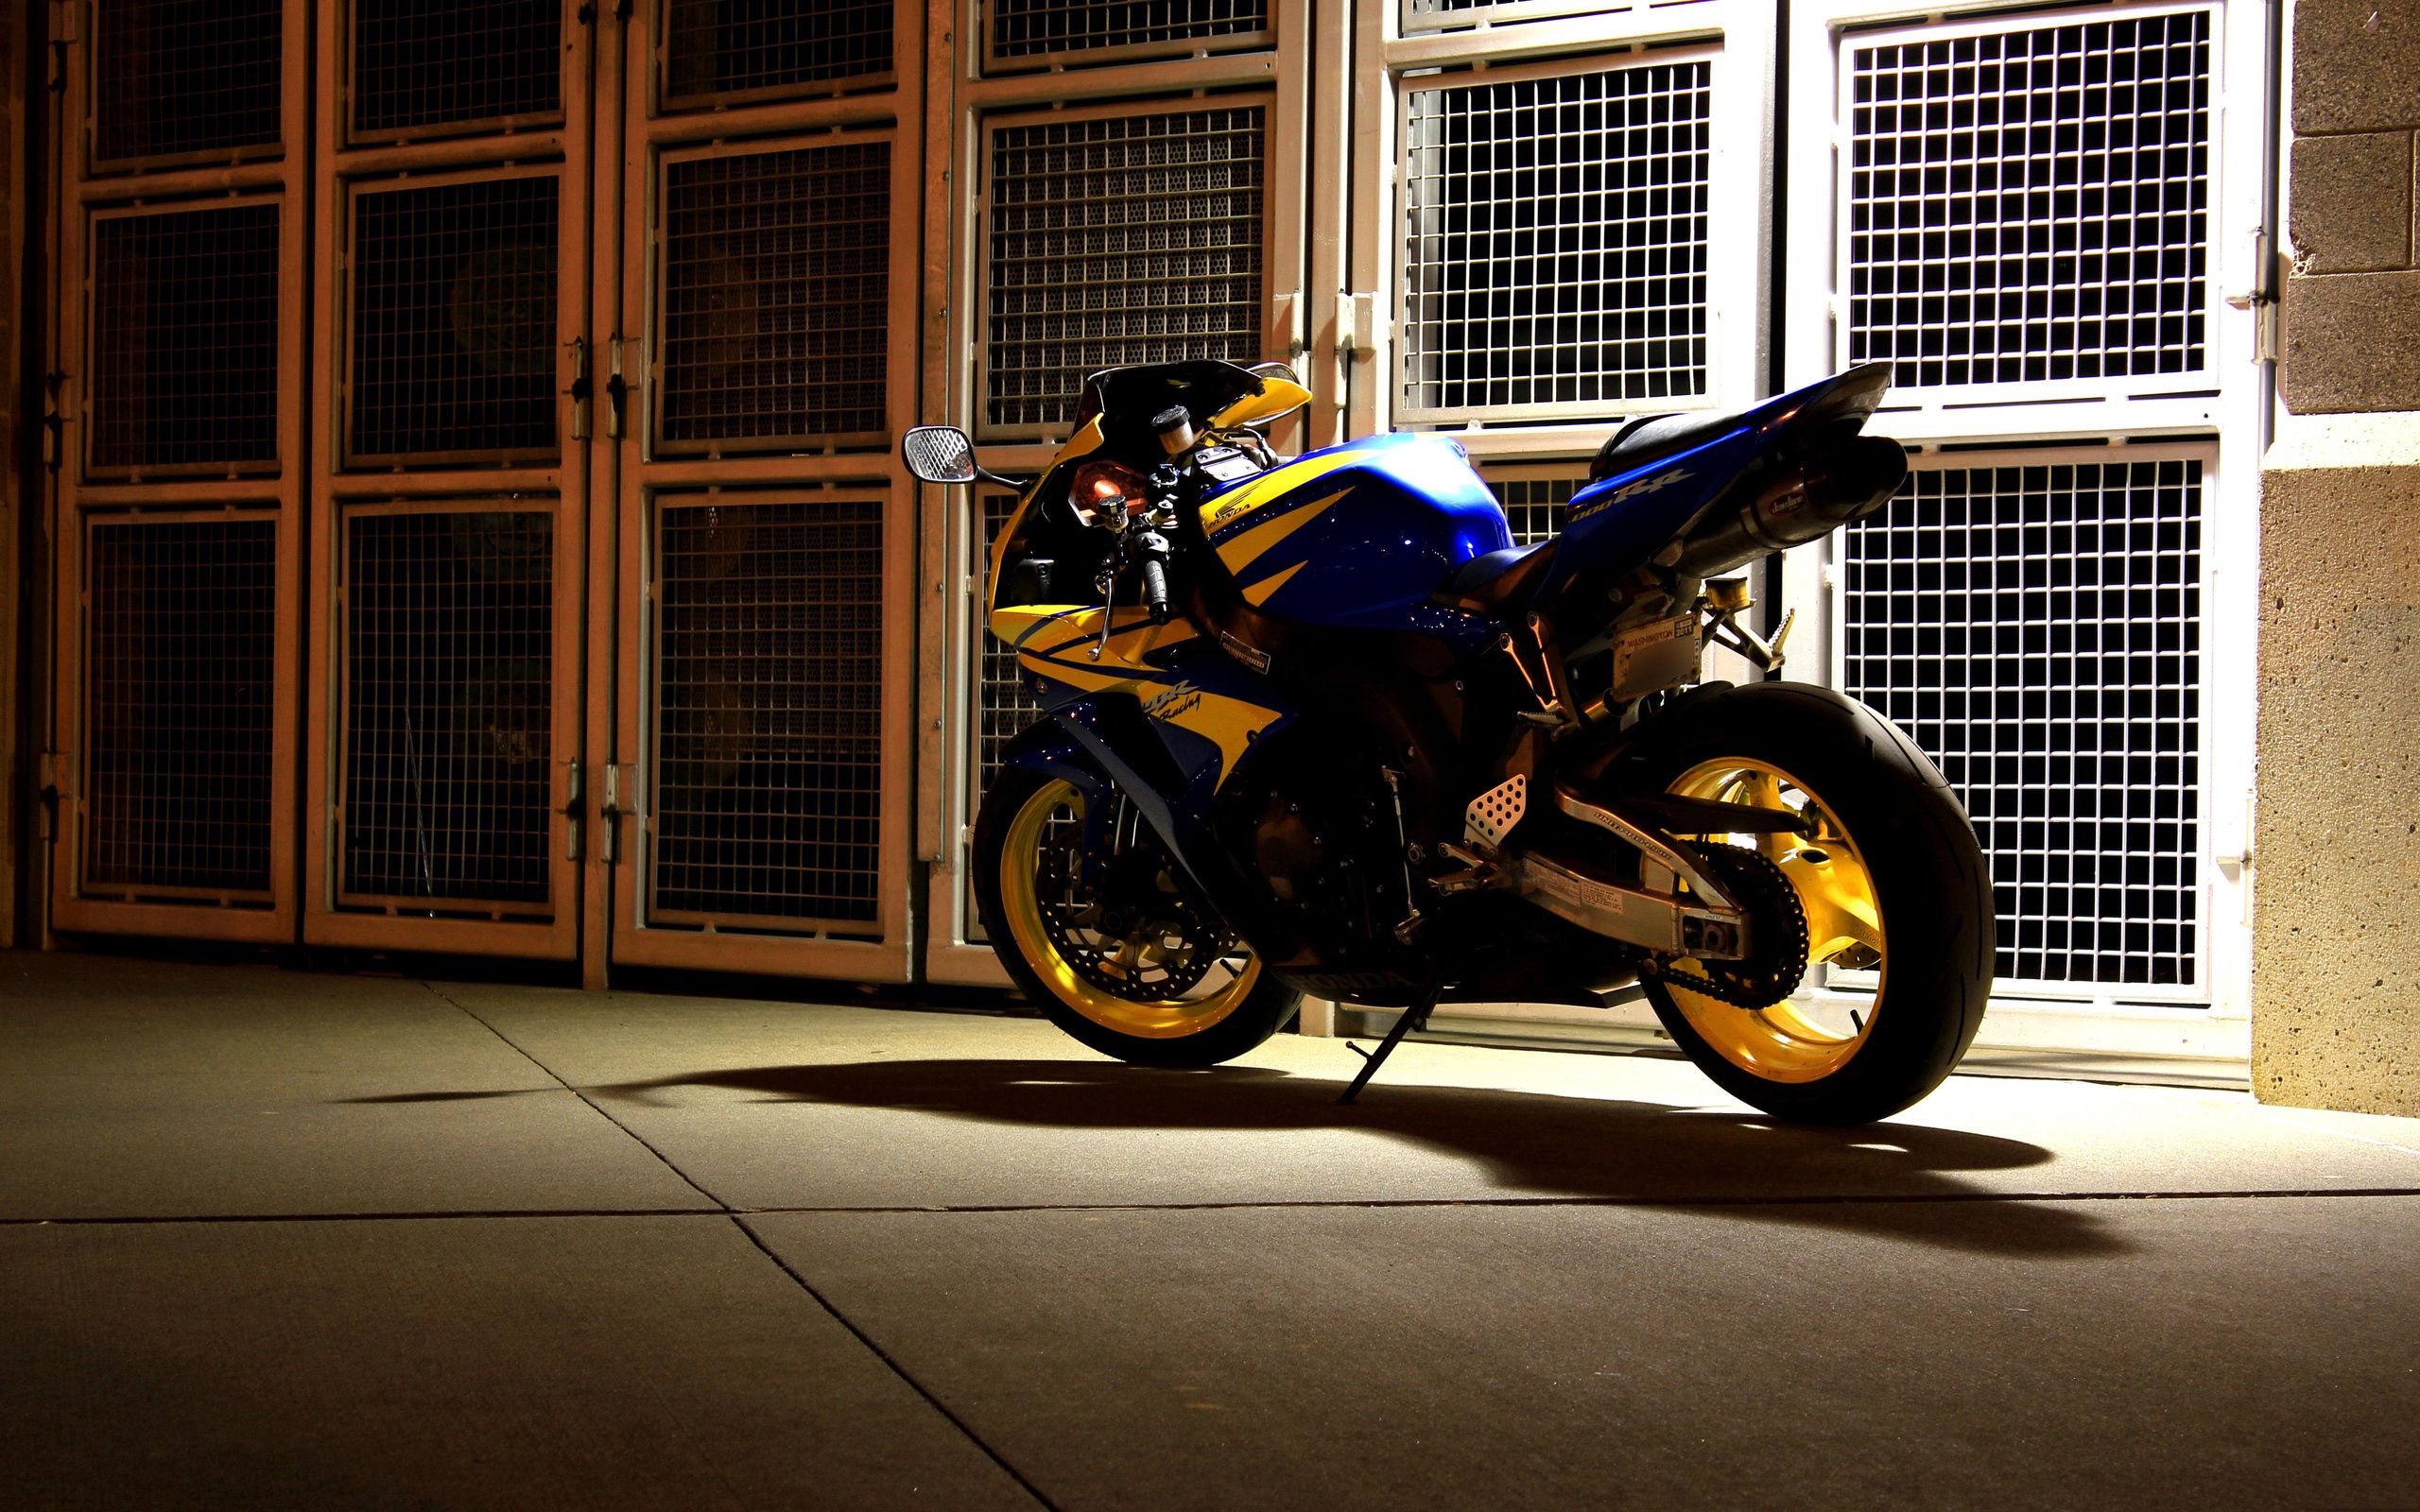 night, motorcycles, motorcycle, courtyard, yard